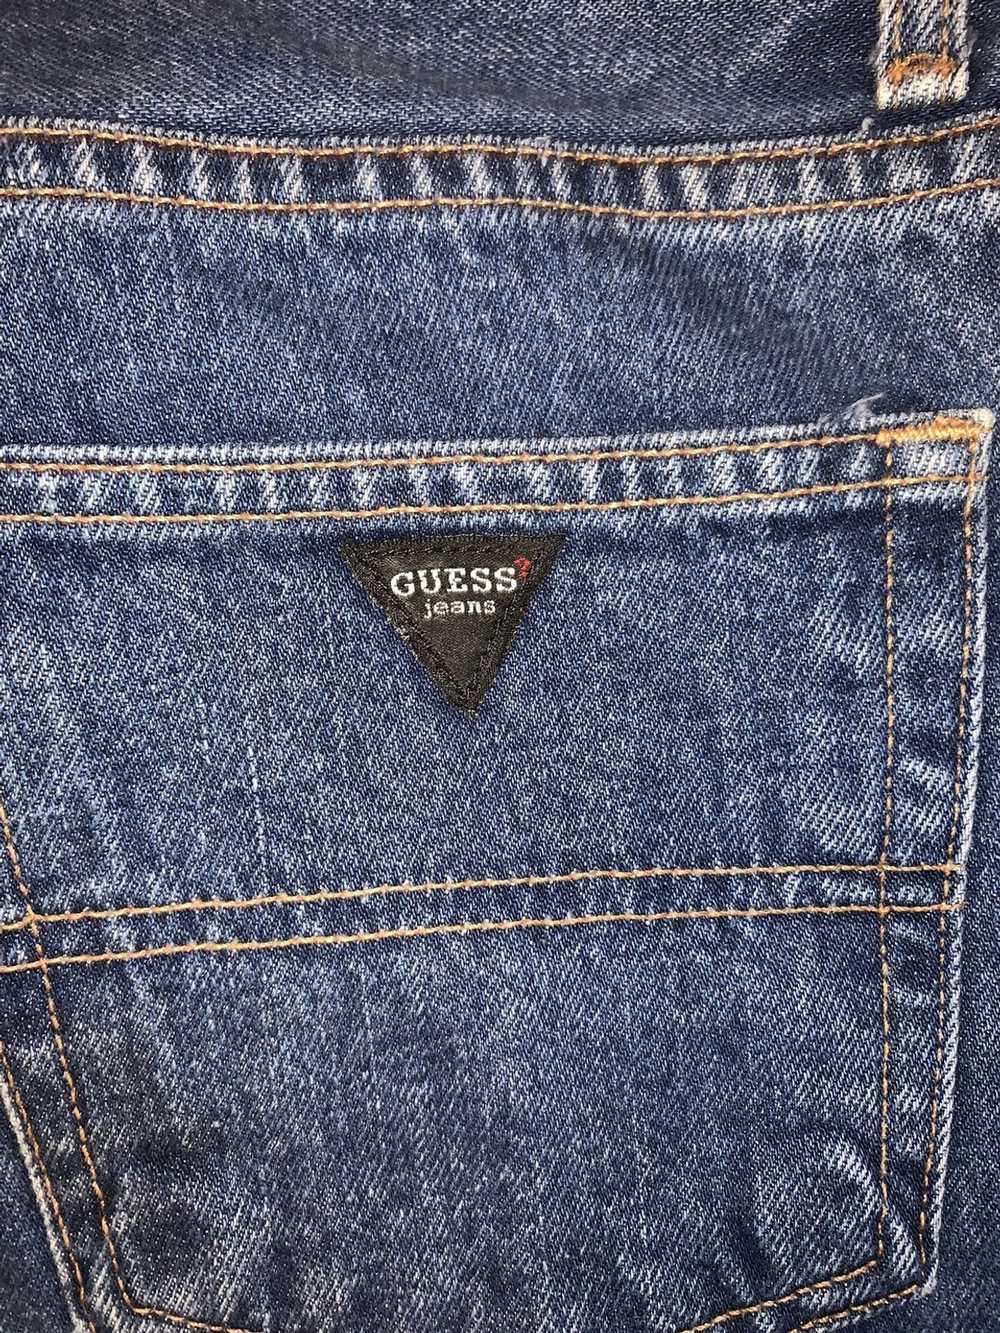 Guess × Streetwear × Vintage Vintage Guess jeans - image 8